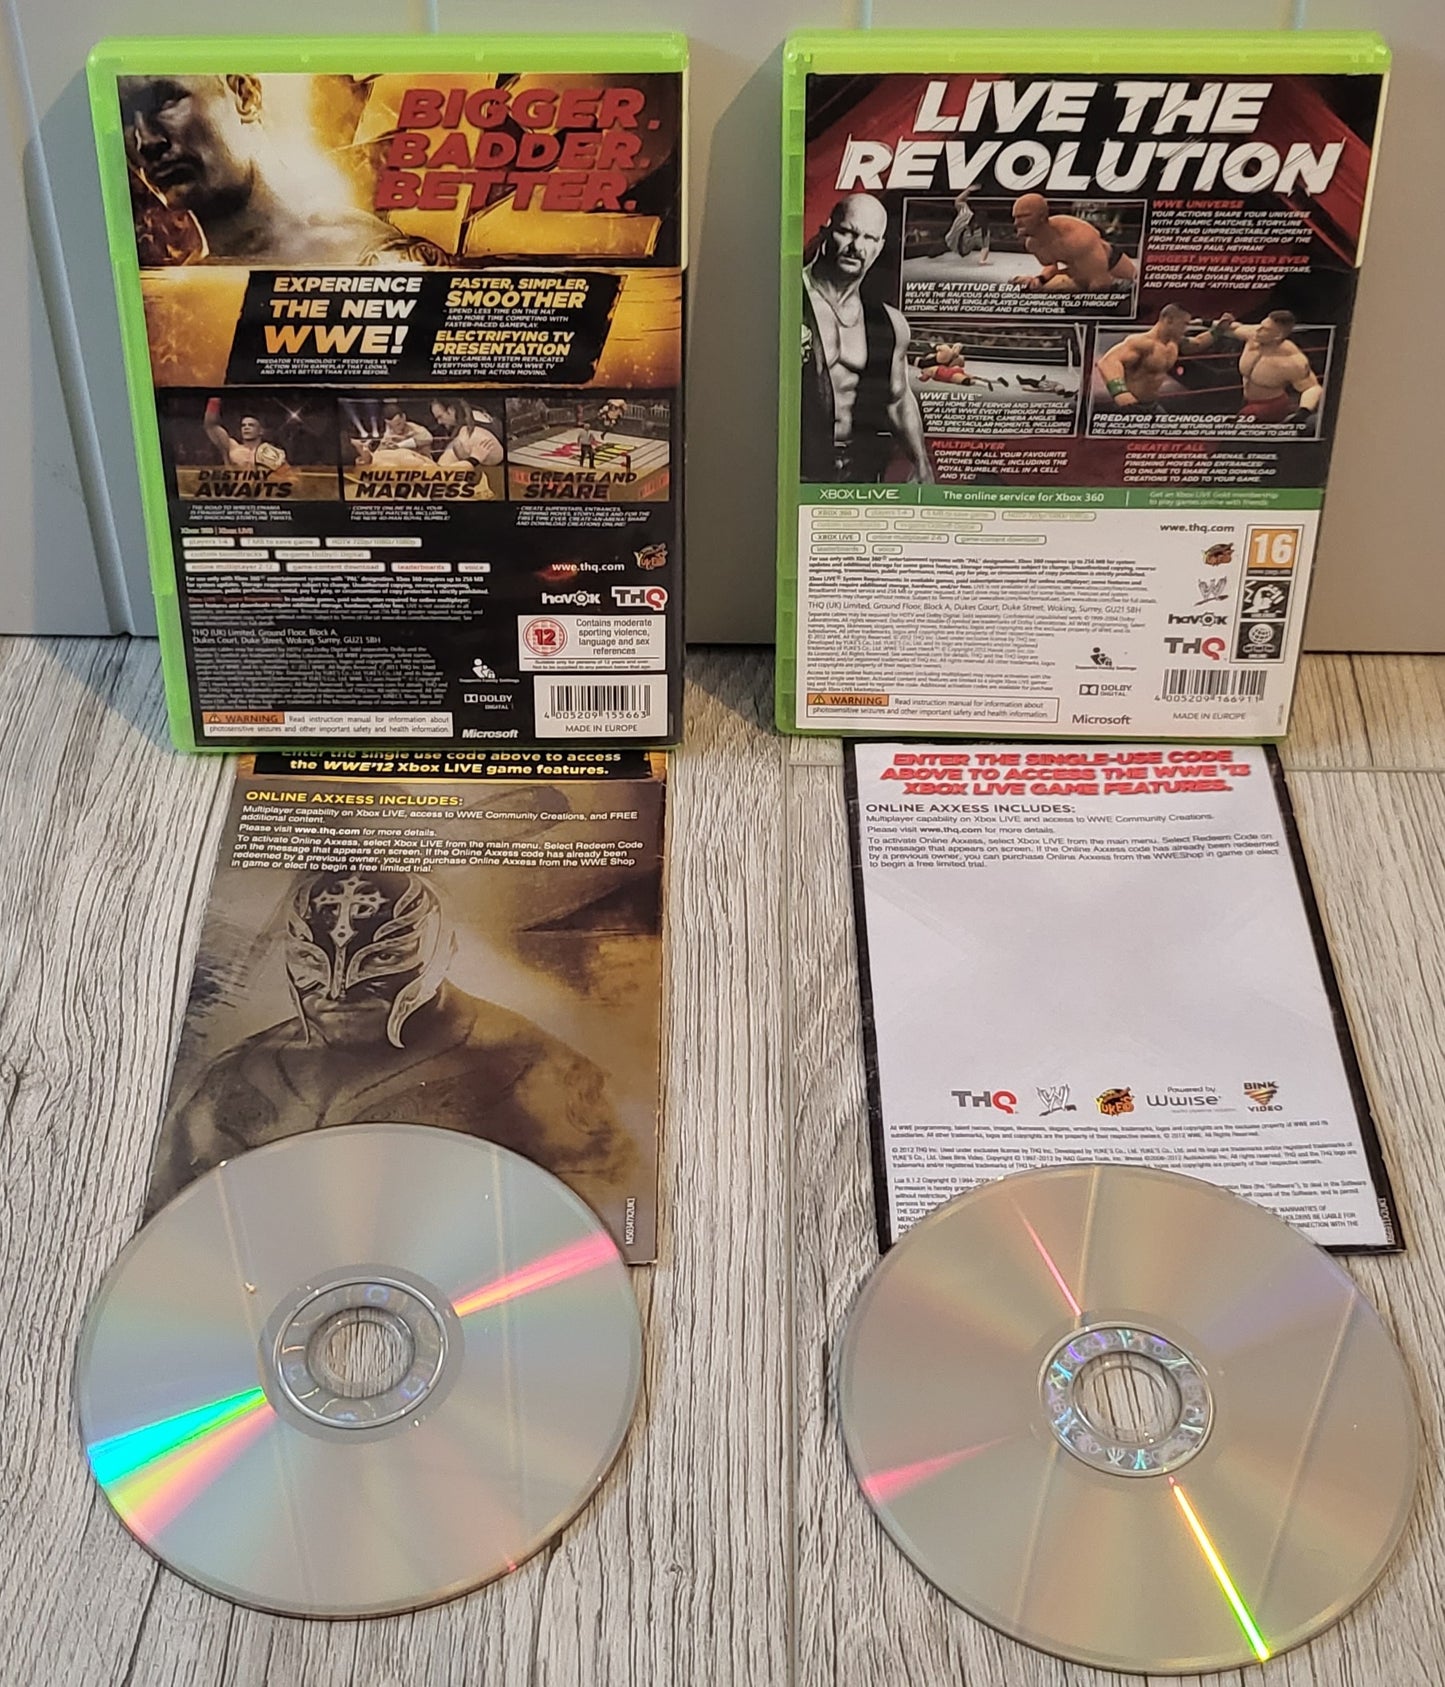 WWE 12 & 13 Microsoft Xbox 360 Game Bundle